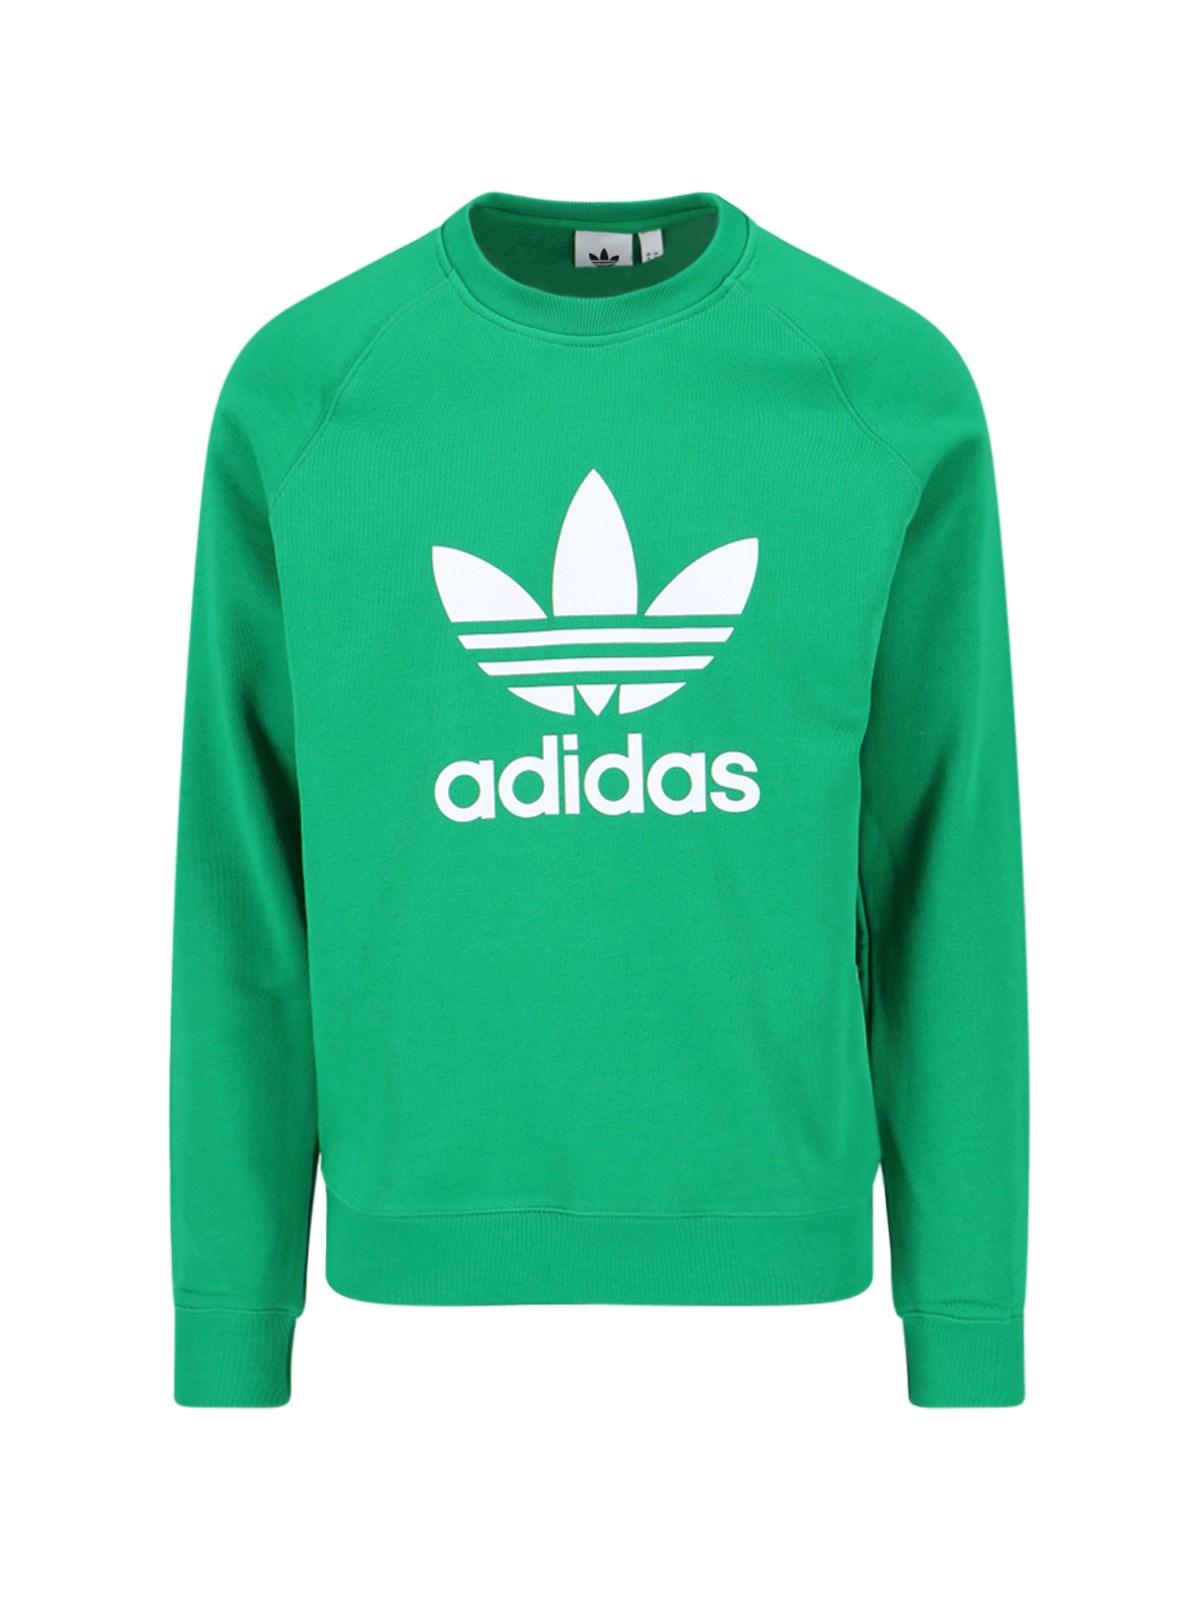 adidas "classics Trefoil" Crew Neck Sweatshirt in Green for Men | Lyst